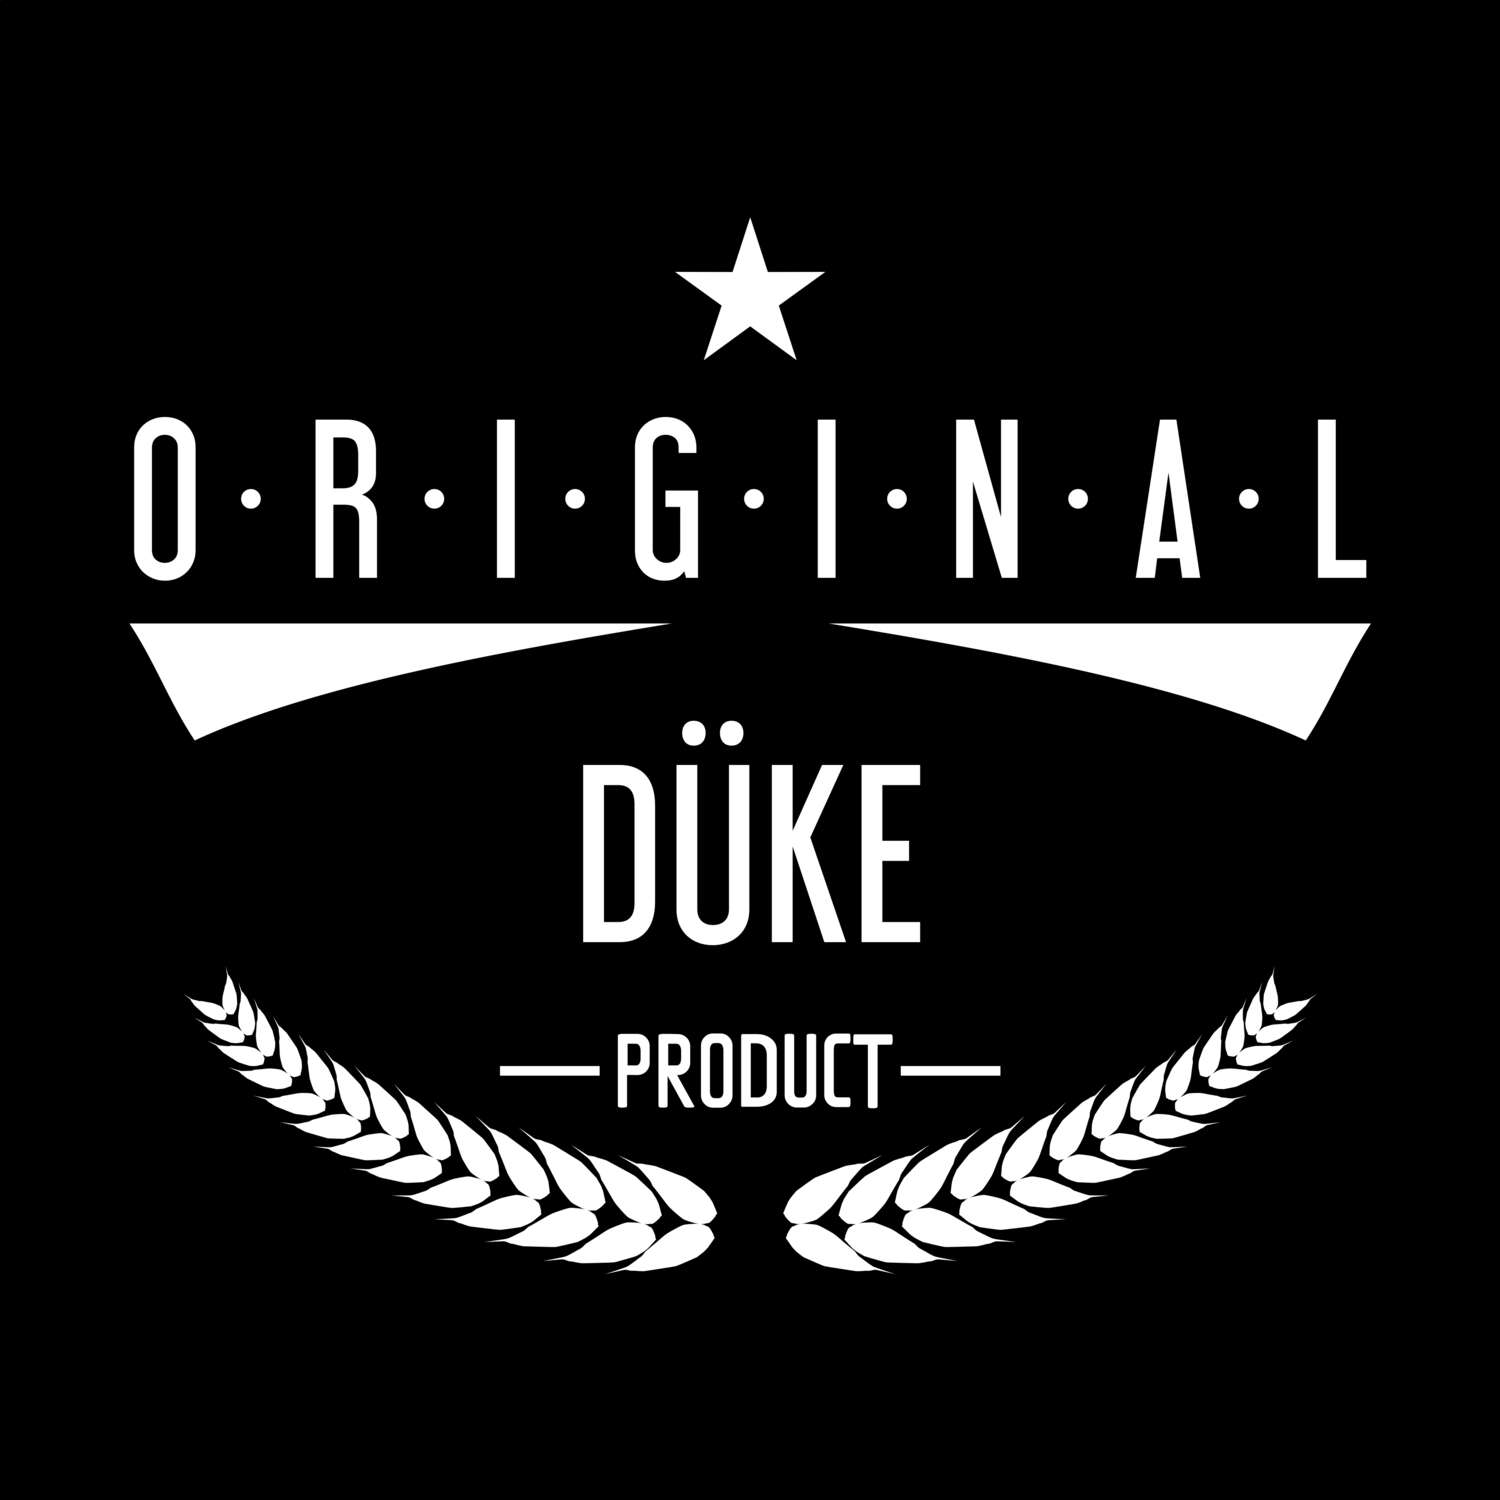 Düke T-Shirt »Original Product«